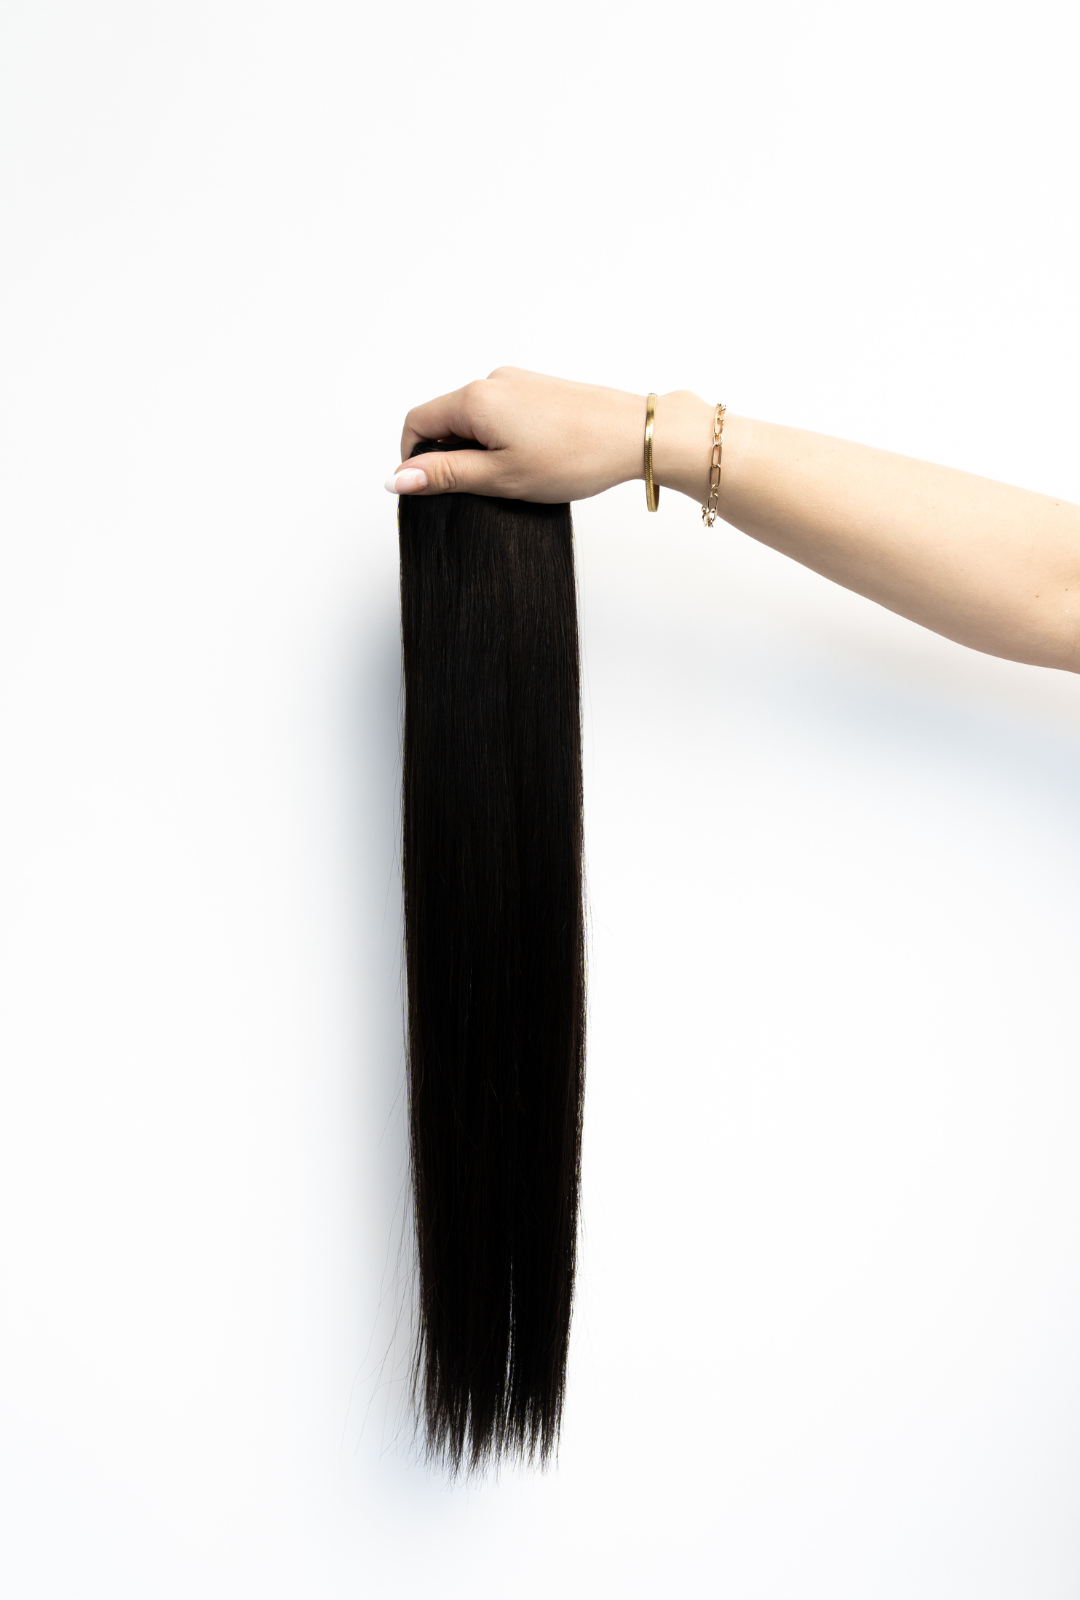 Laced Hair Tape-In Extensions #1B (Dark Roast)